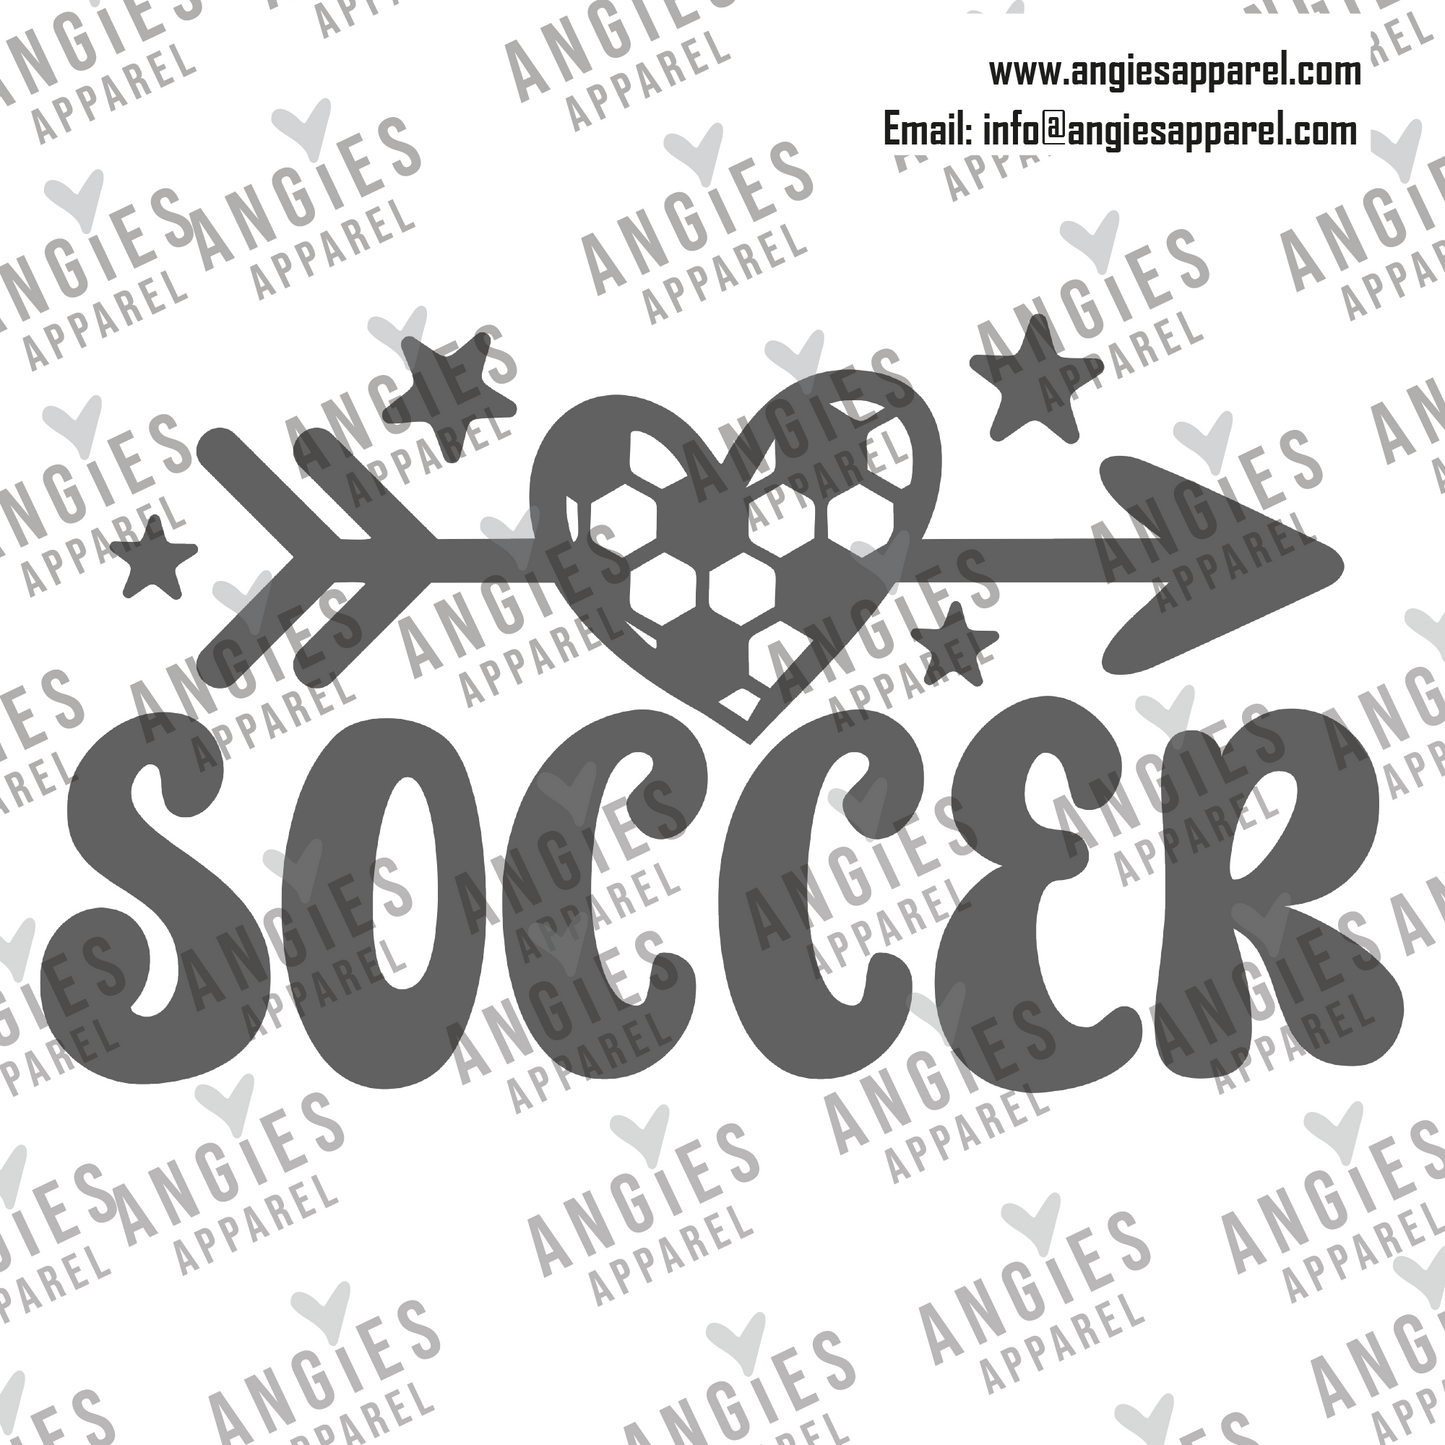 13. Soccer - Soccer - Ready to Press